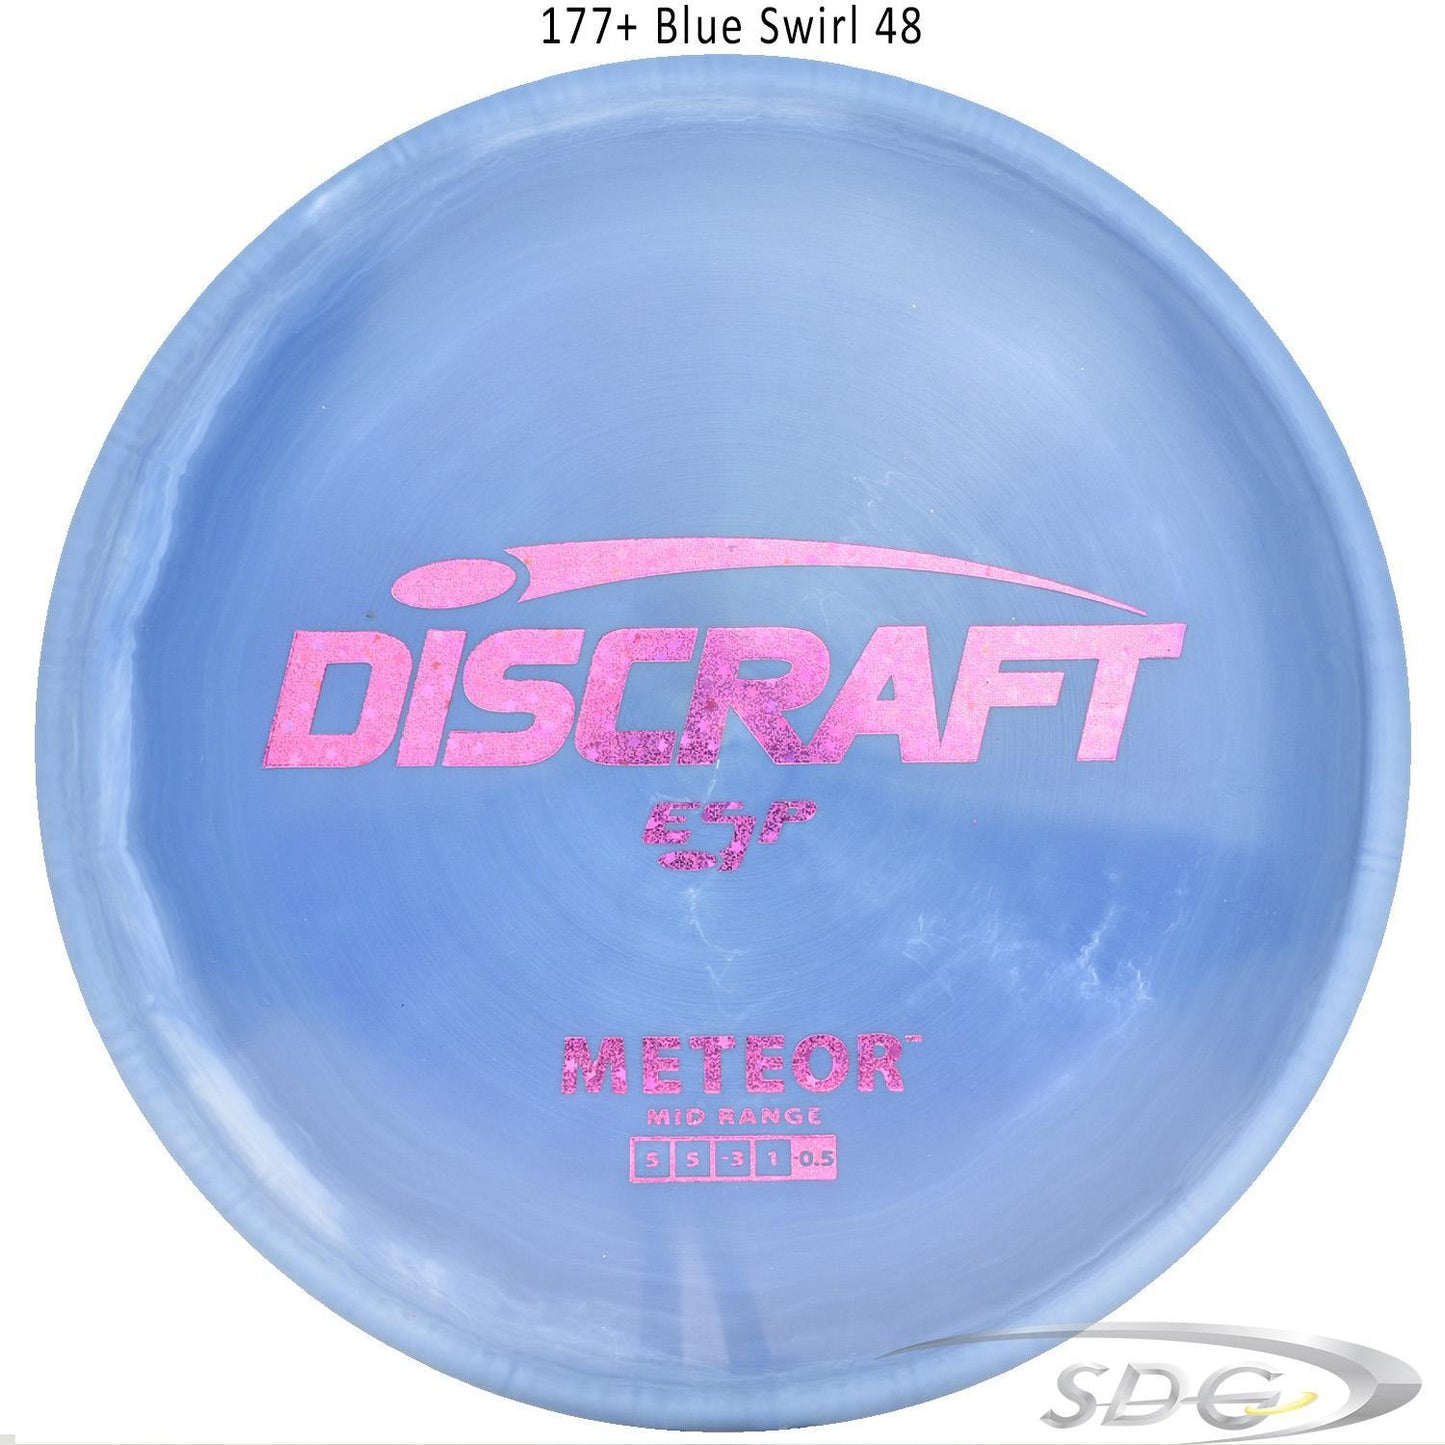 discraft-esp-meteor-disc-golf-mid-range 177+ Blue Swirl 48